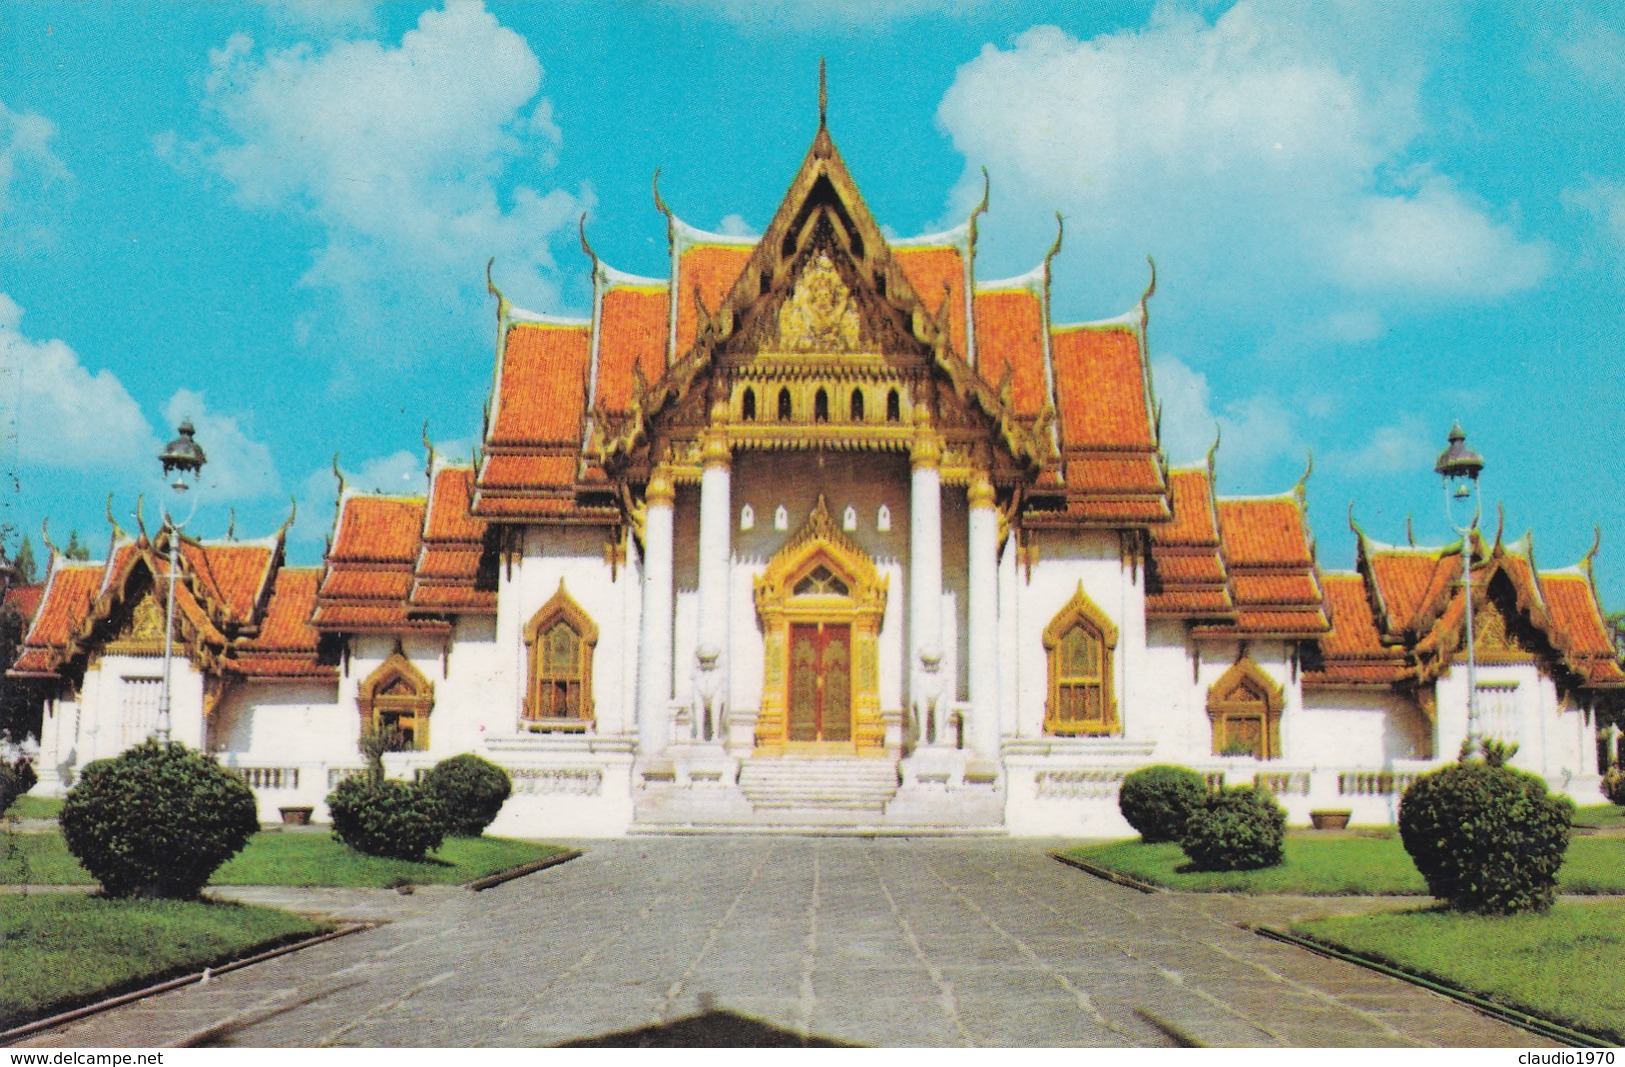 CARTOLINA - POSTCARD - TAILANDIA - WAT BENCHAMABOPHITR - MARPLE TEMPLE BANGKOK - Tailandia